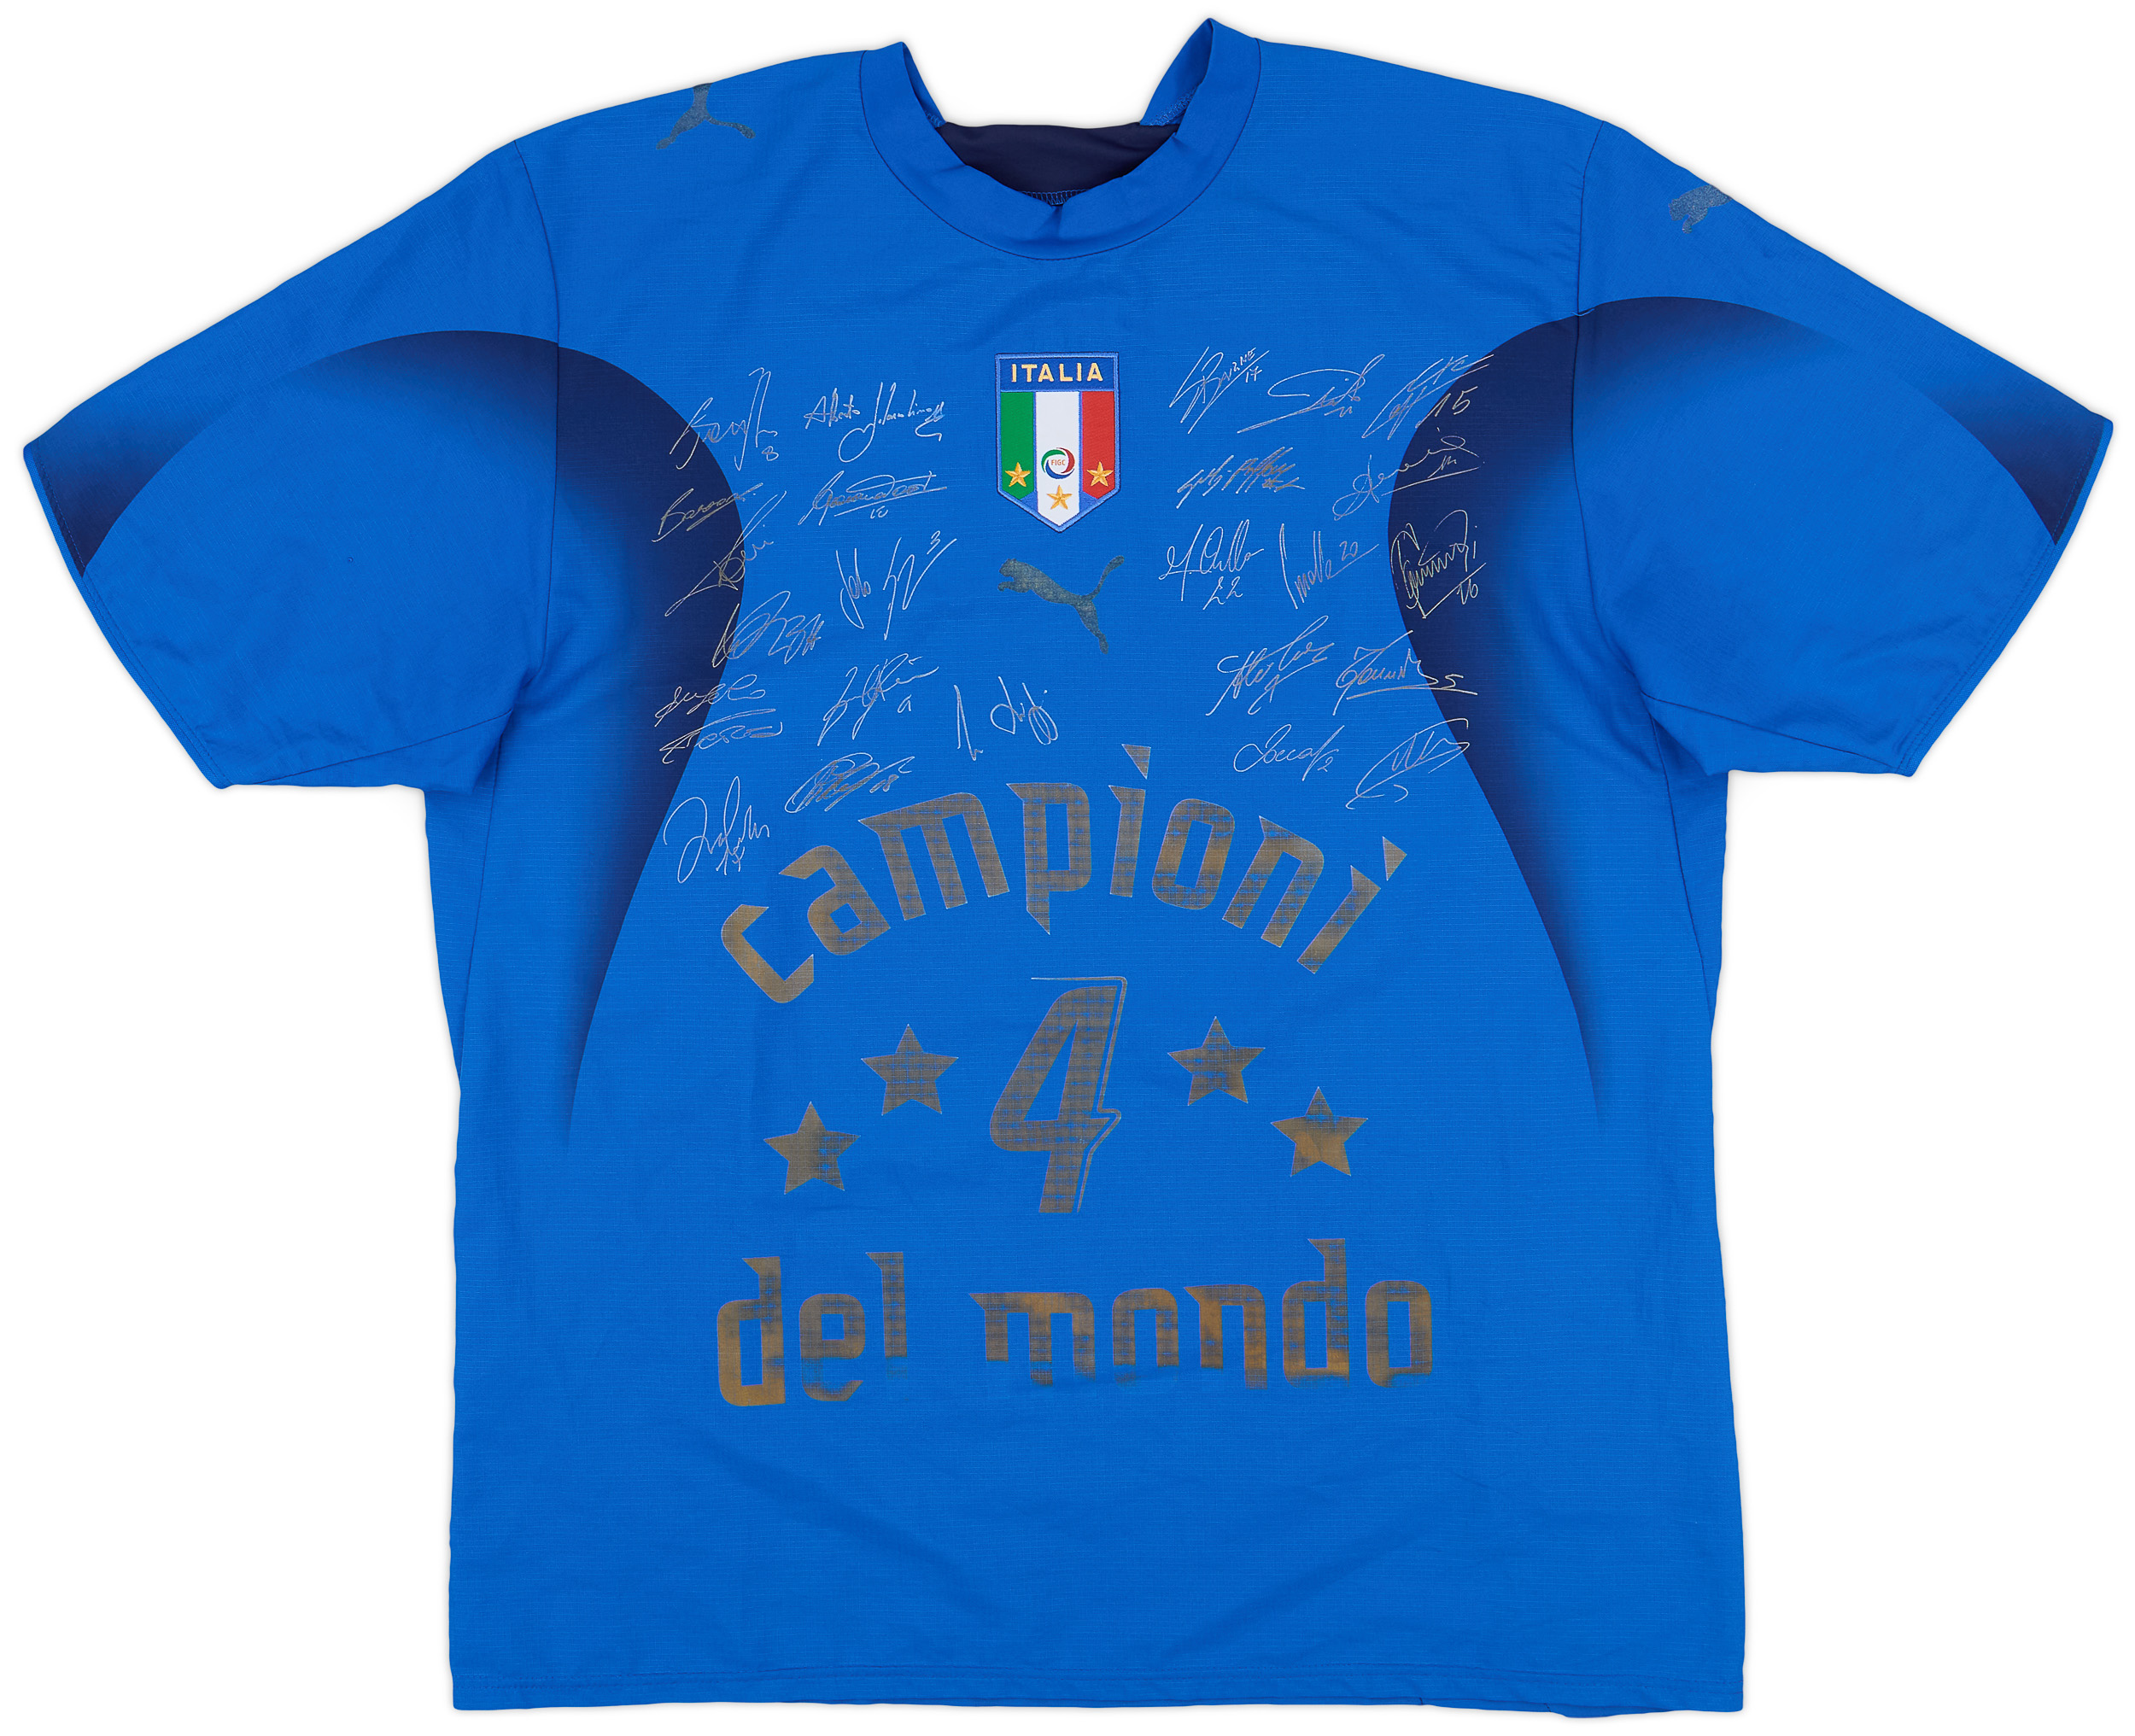 2006 Italy 'Campioni Del Mondo' 'Signed' Home Shirt - 5/10 - ()